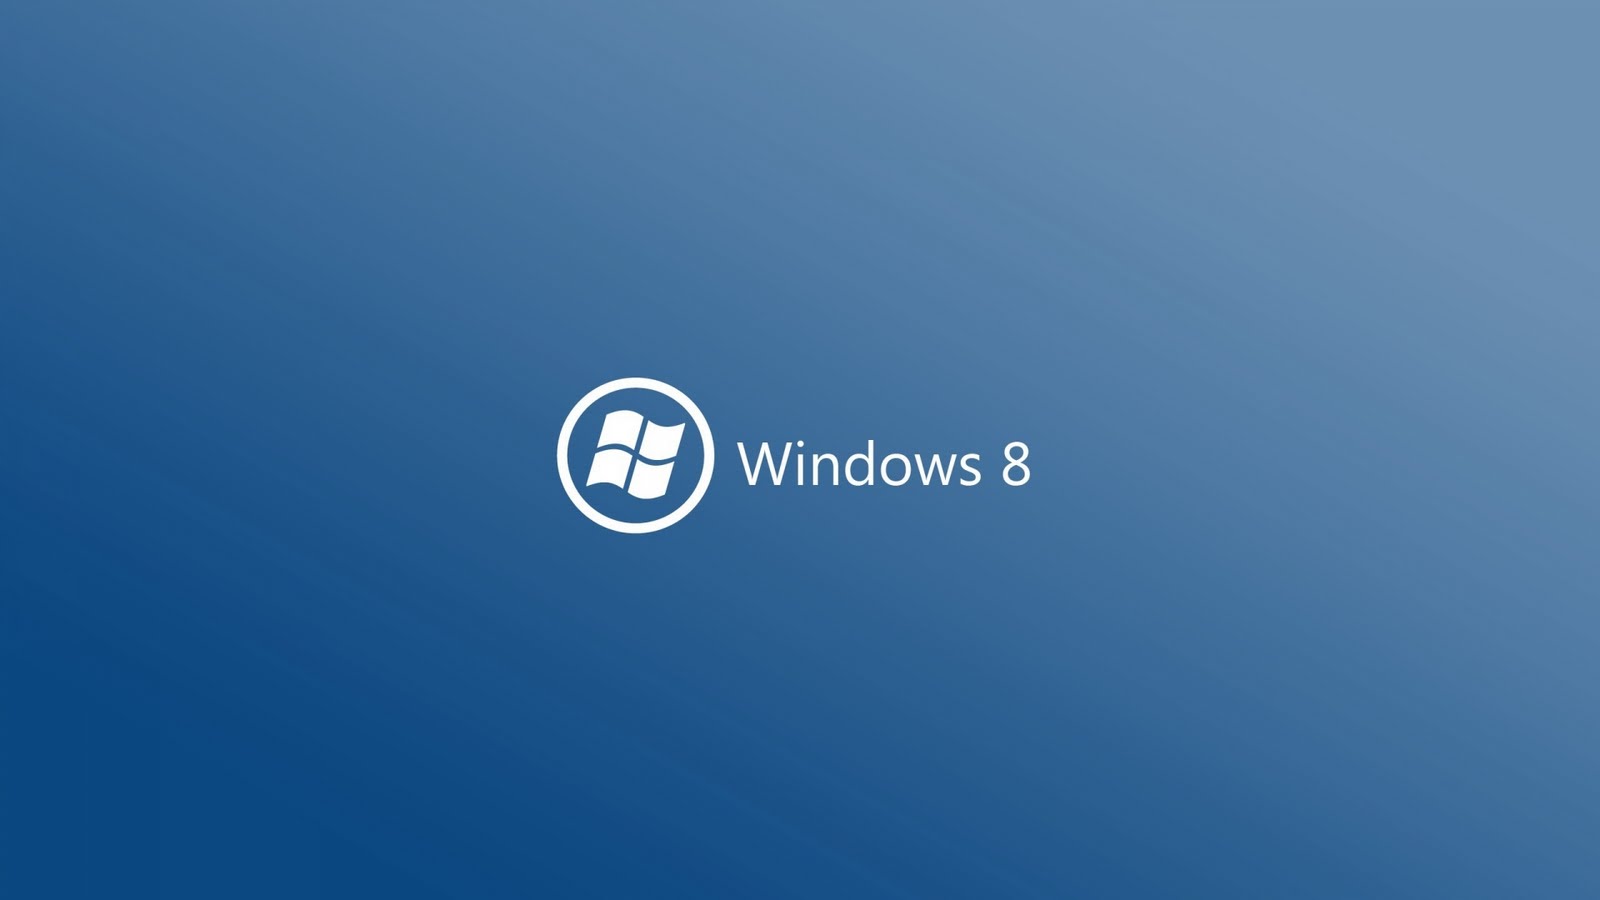 Windows 8 Logo Wallpaper 1920x1080 Wallpapersafari